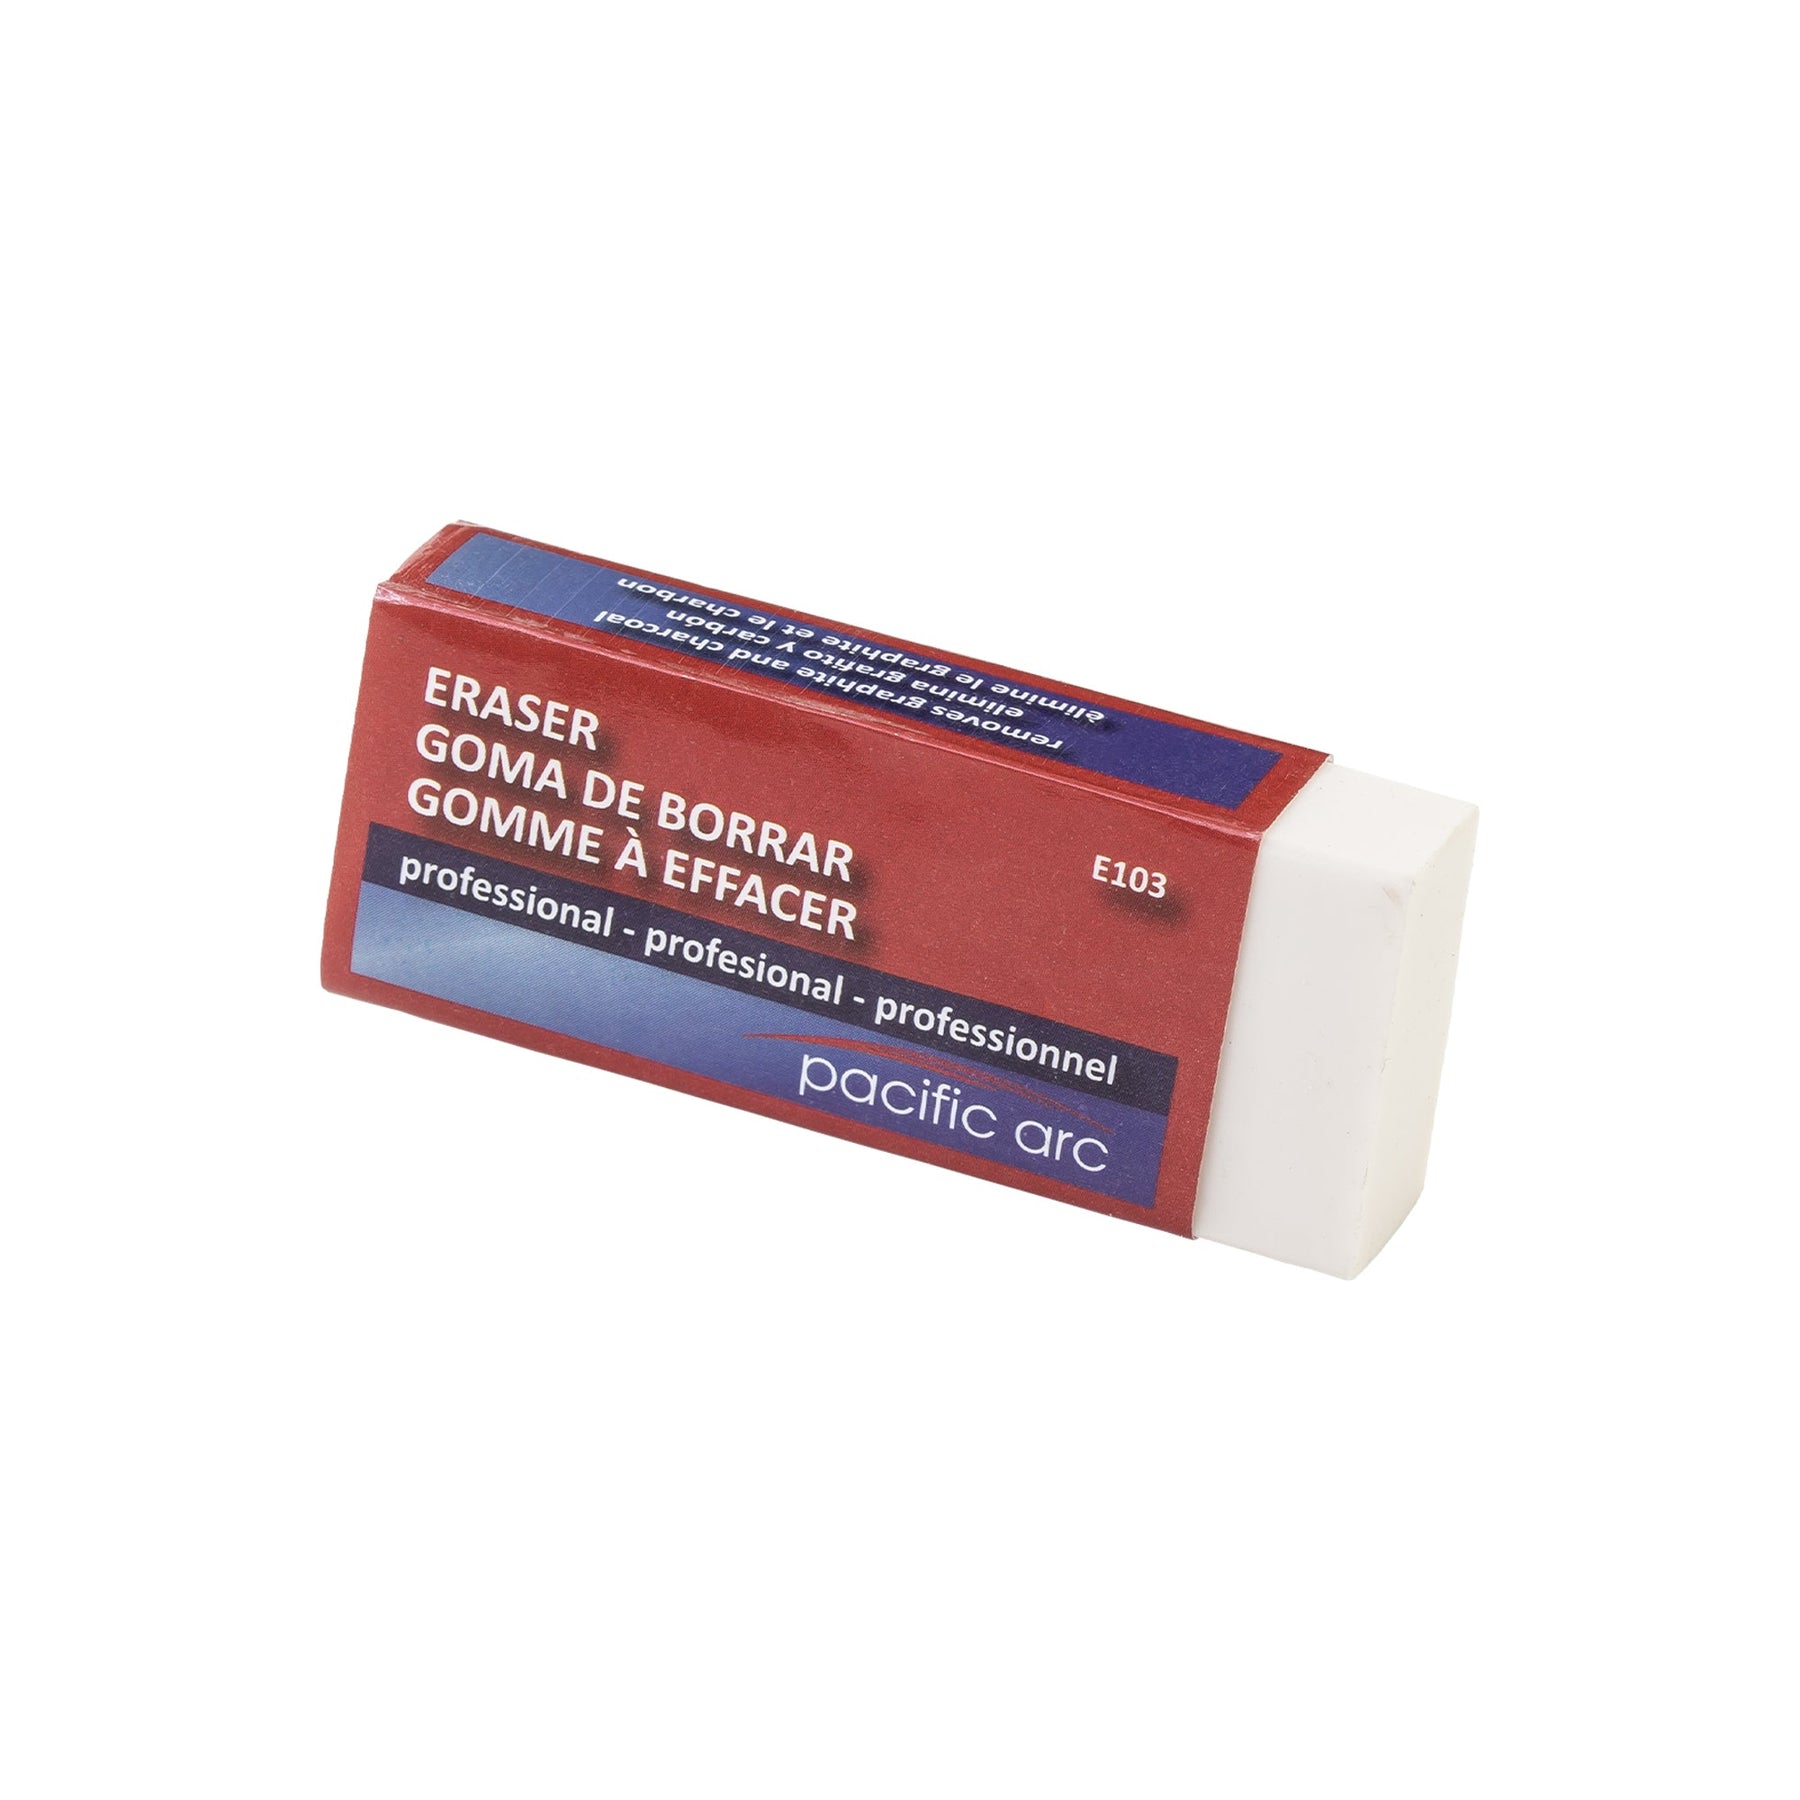 Pacific Arc, Eraser: soft white plastic